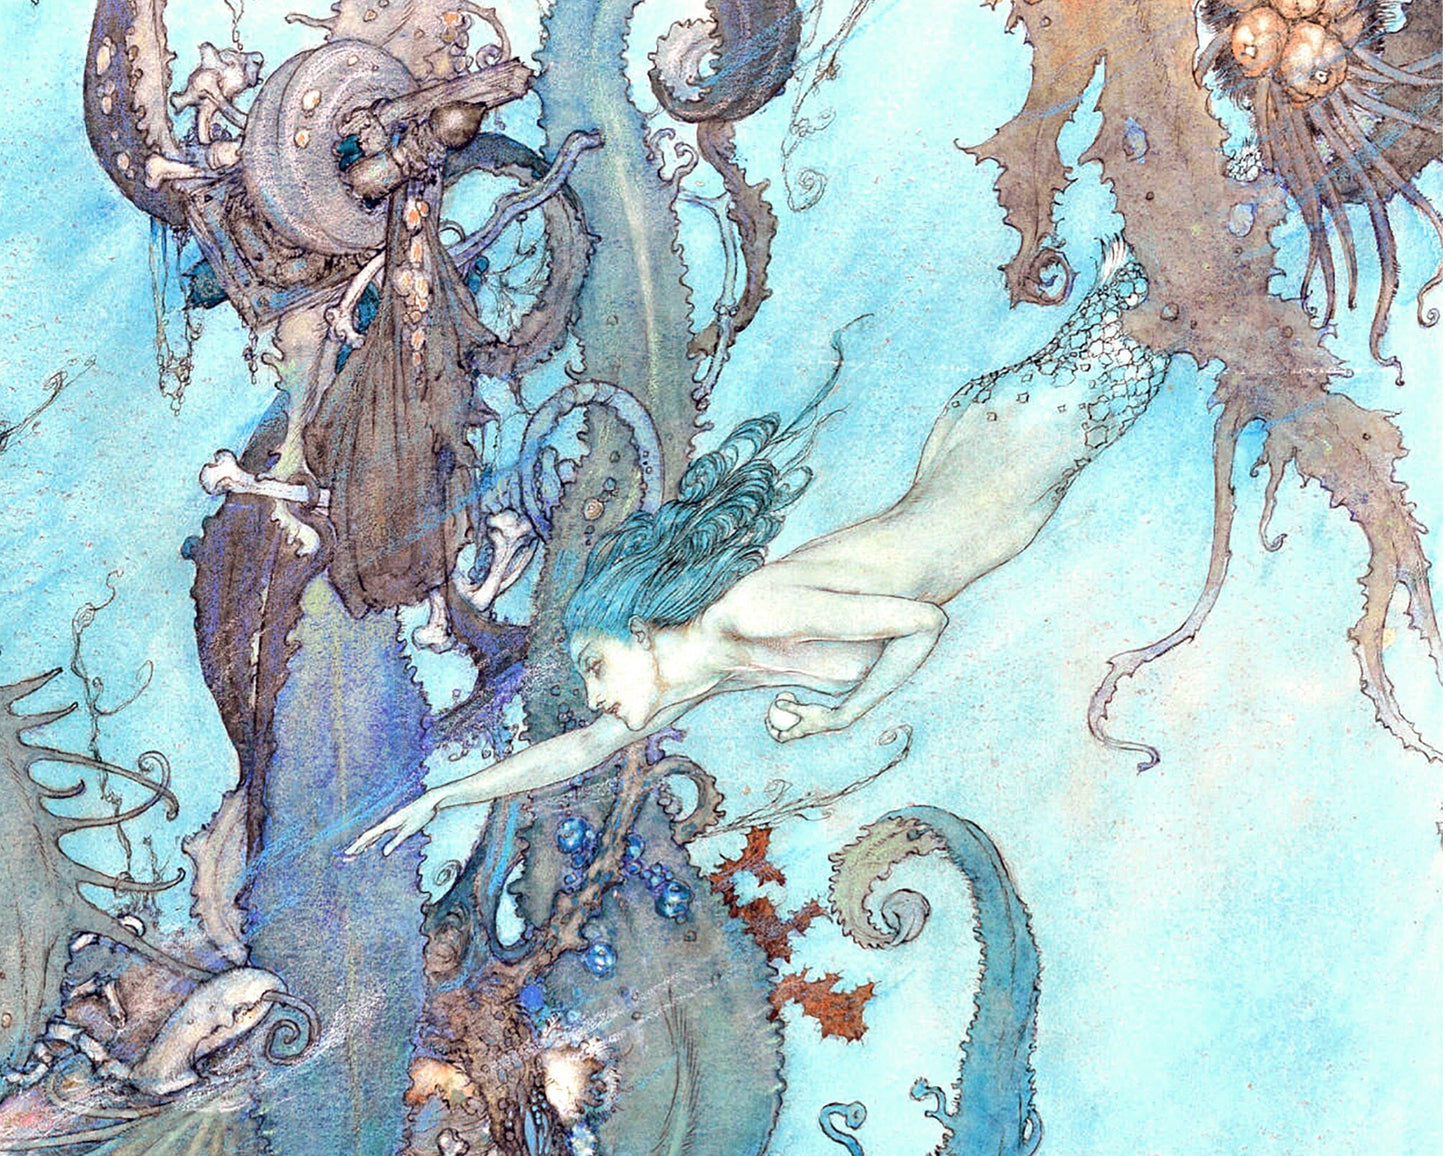 Vintage Mermaid art print | Little Mermaid | Dulac book illustration | Fantasy wall art | Cabin, lake, bathroom decor | Underwater in art